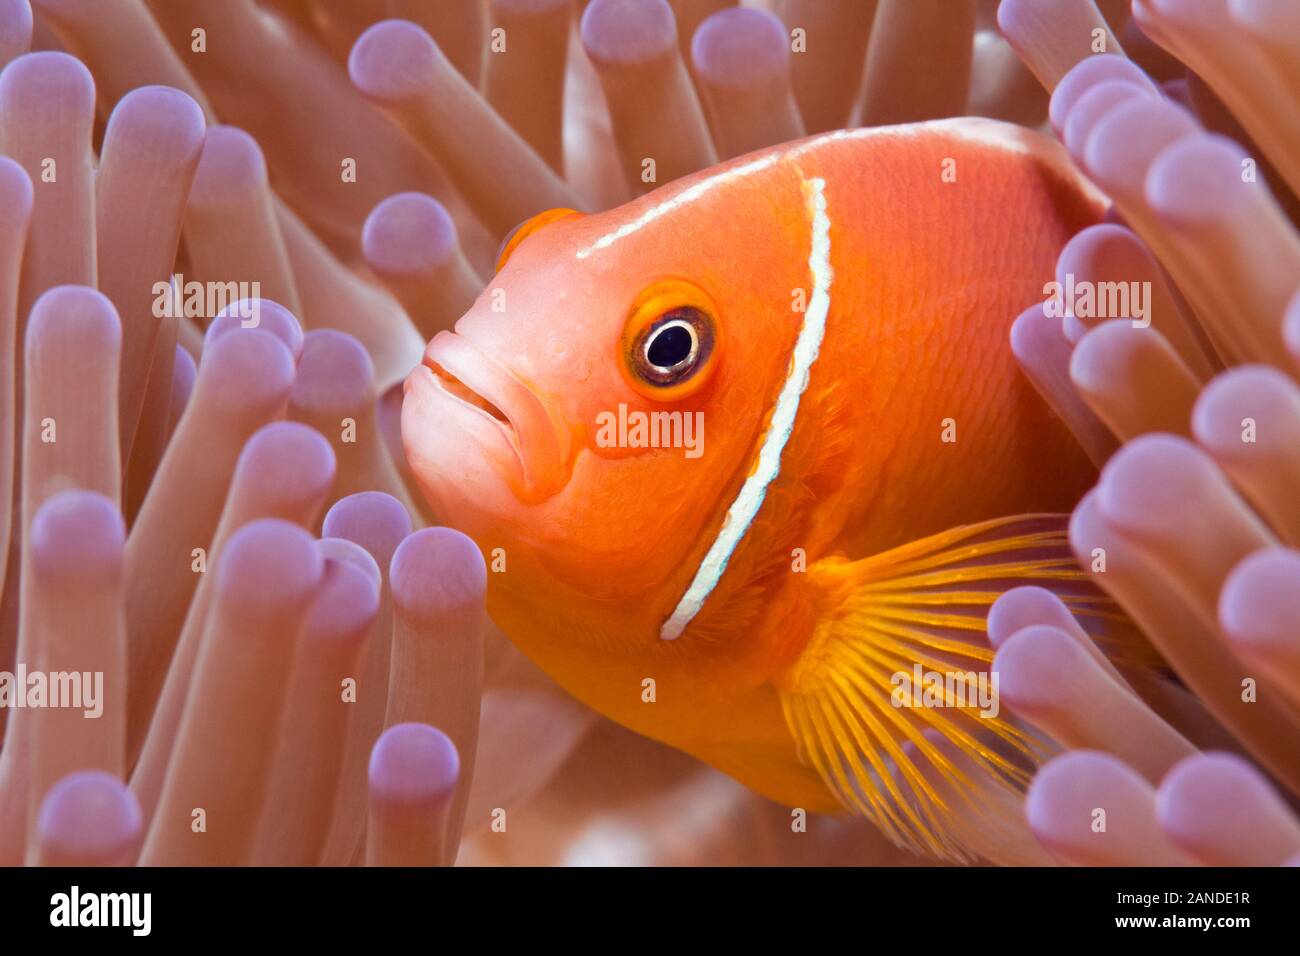 Rosa Anemonenfischen, Amphiprion perideraion, in seinem Wirt, prächtige Seeanemone, Heteractis magnifica, Makogai, Lomaviti, Fidschi, South Pacific Ocean Stockfoto